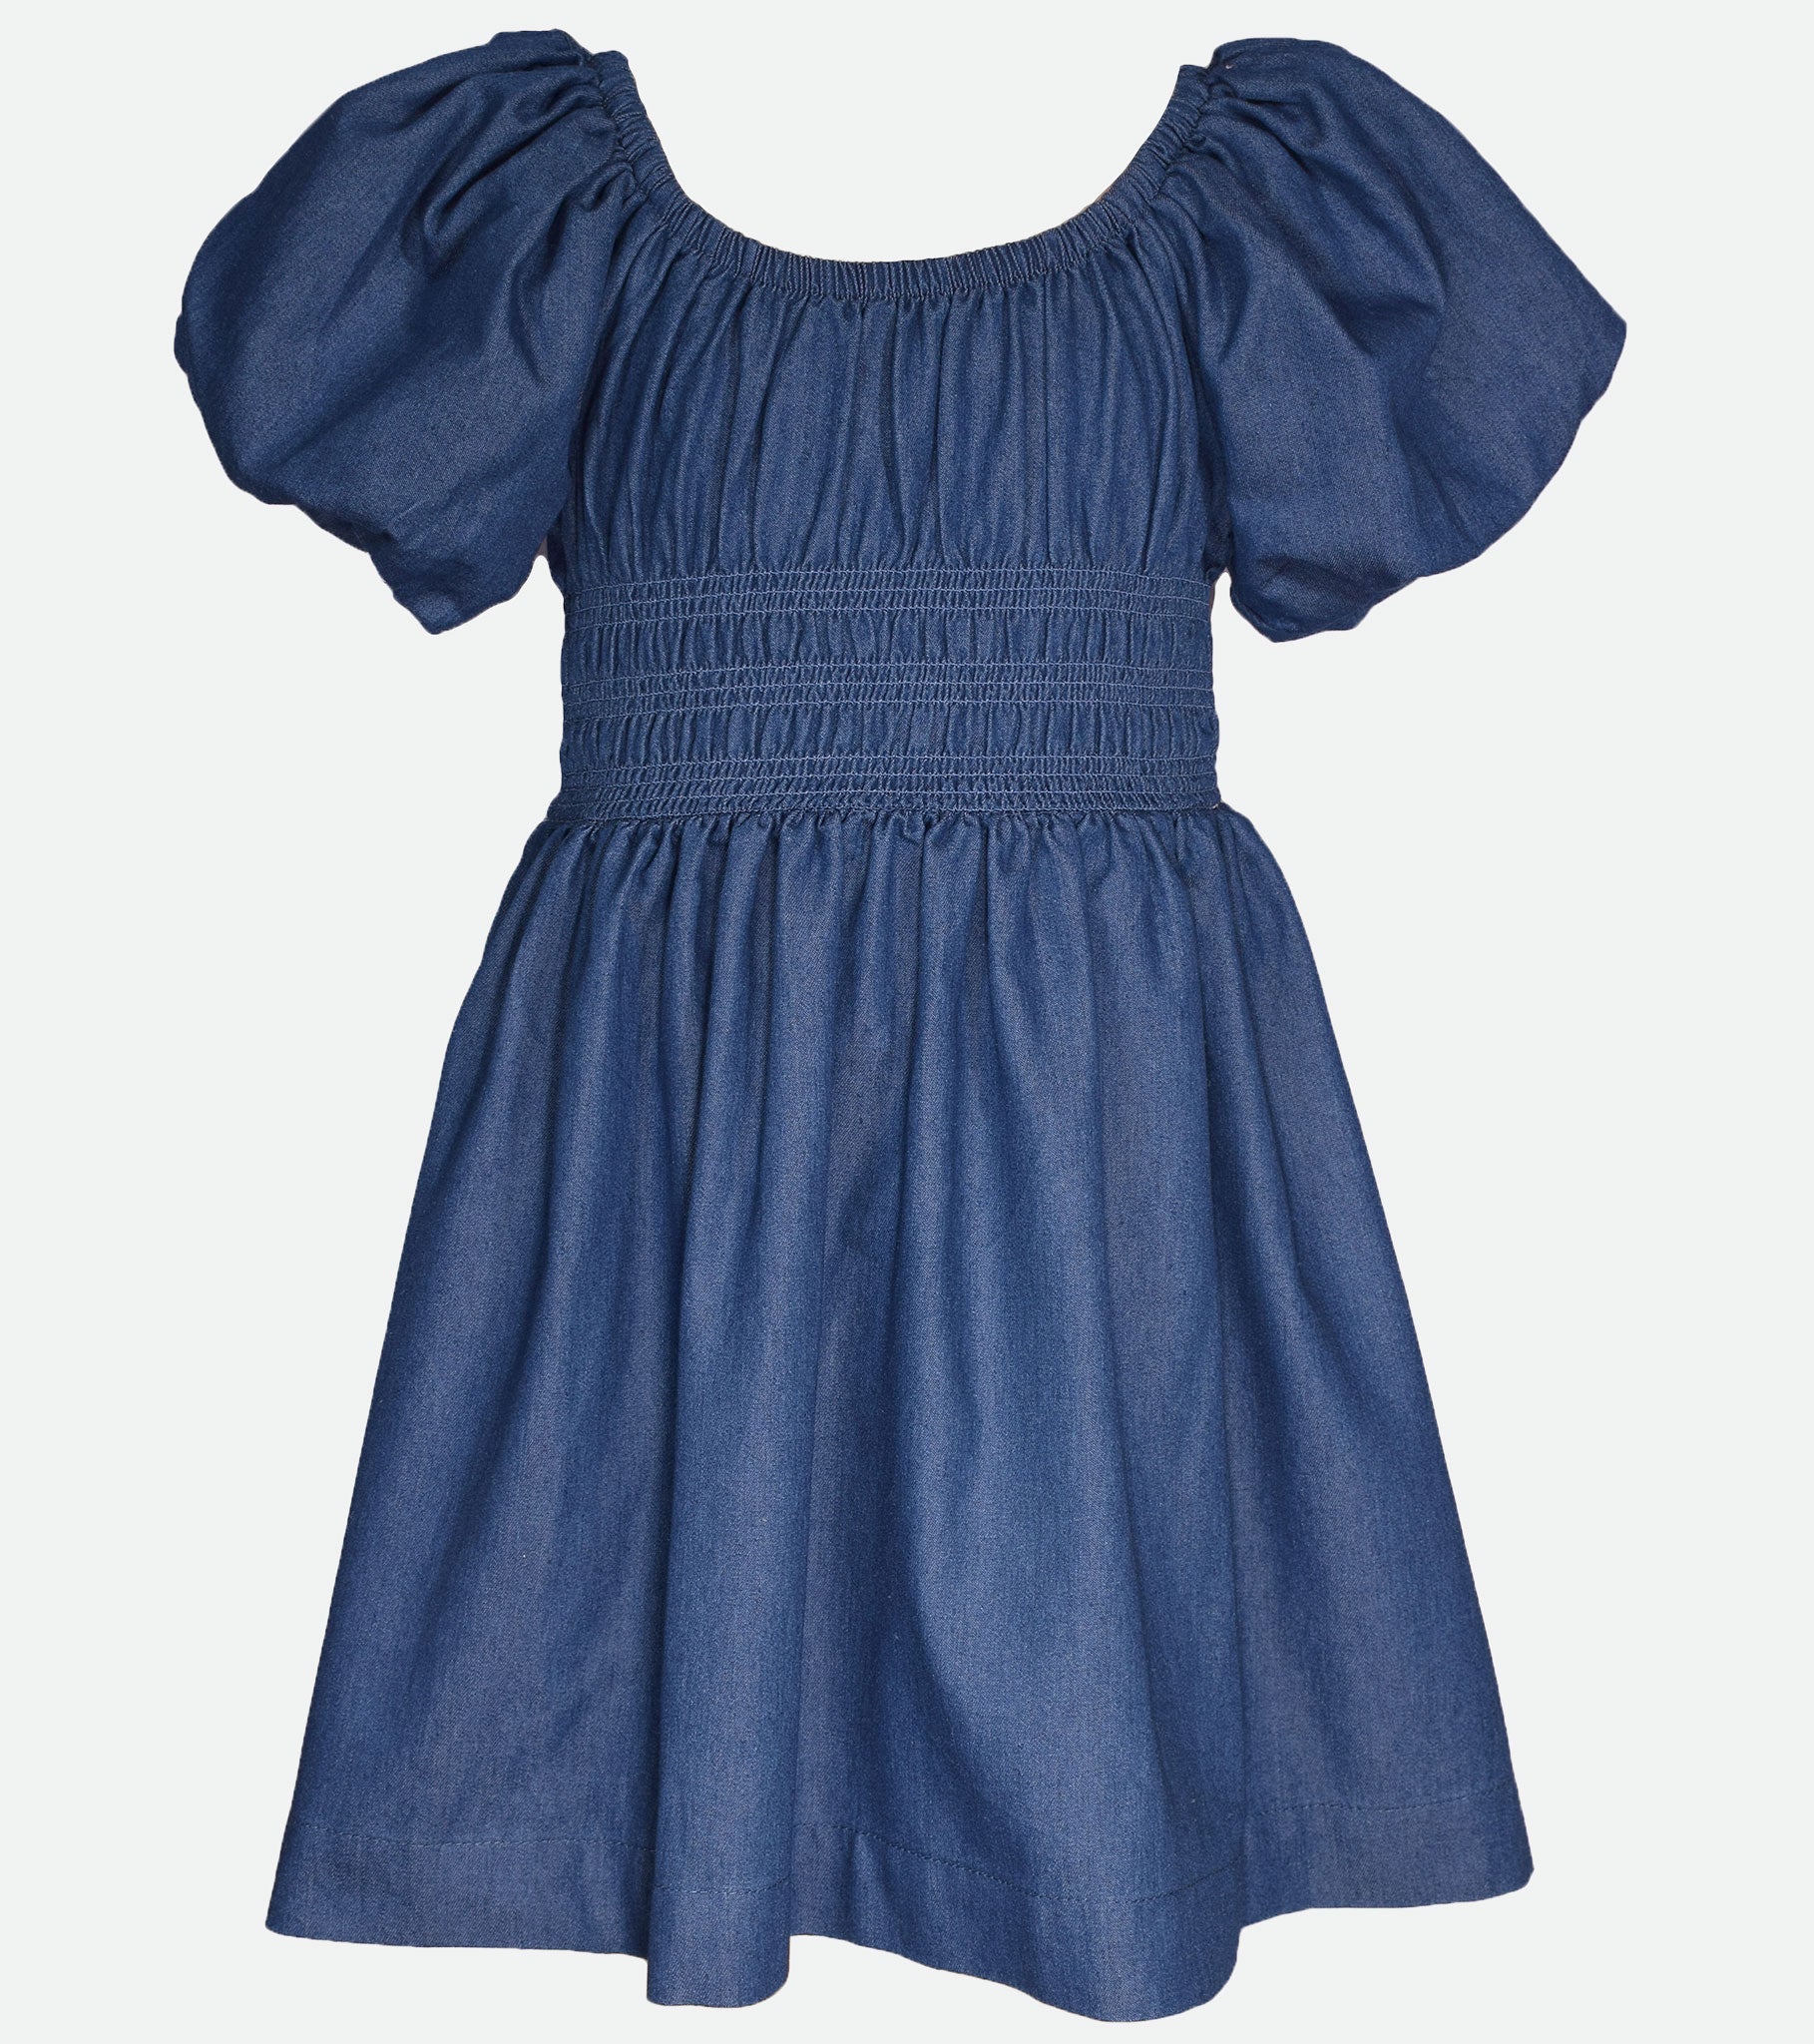 Gini & Jony Girls Blue Solid Denim Full Sleeves Dress 4-5 Years :  Amazon.in: Clothing & Accessories